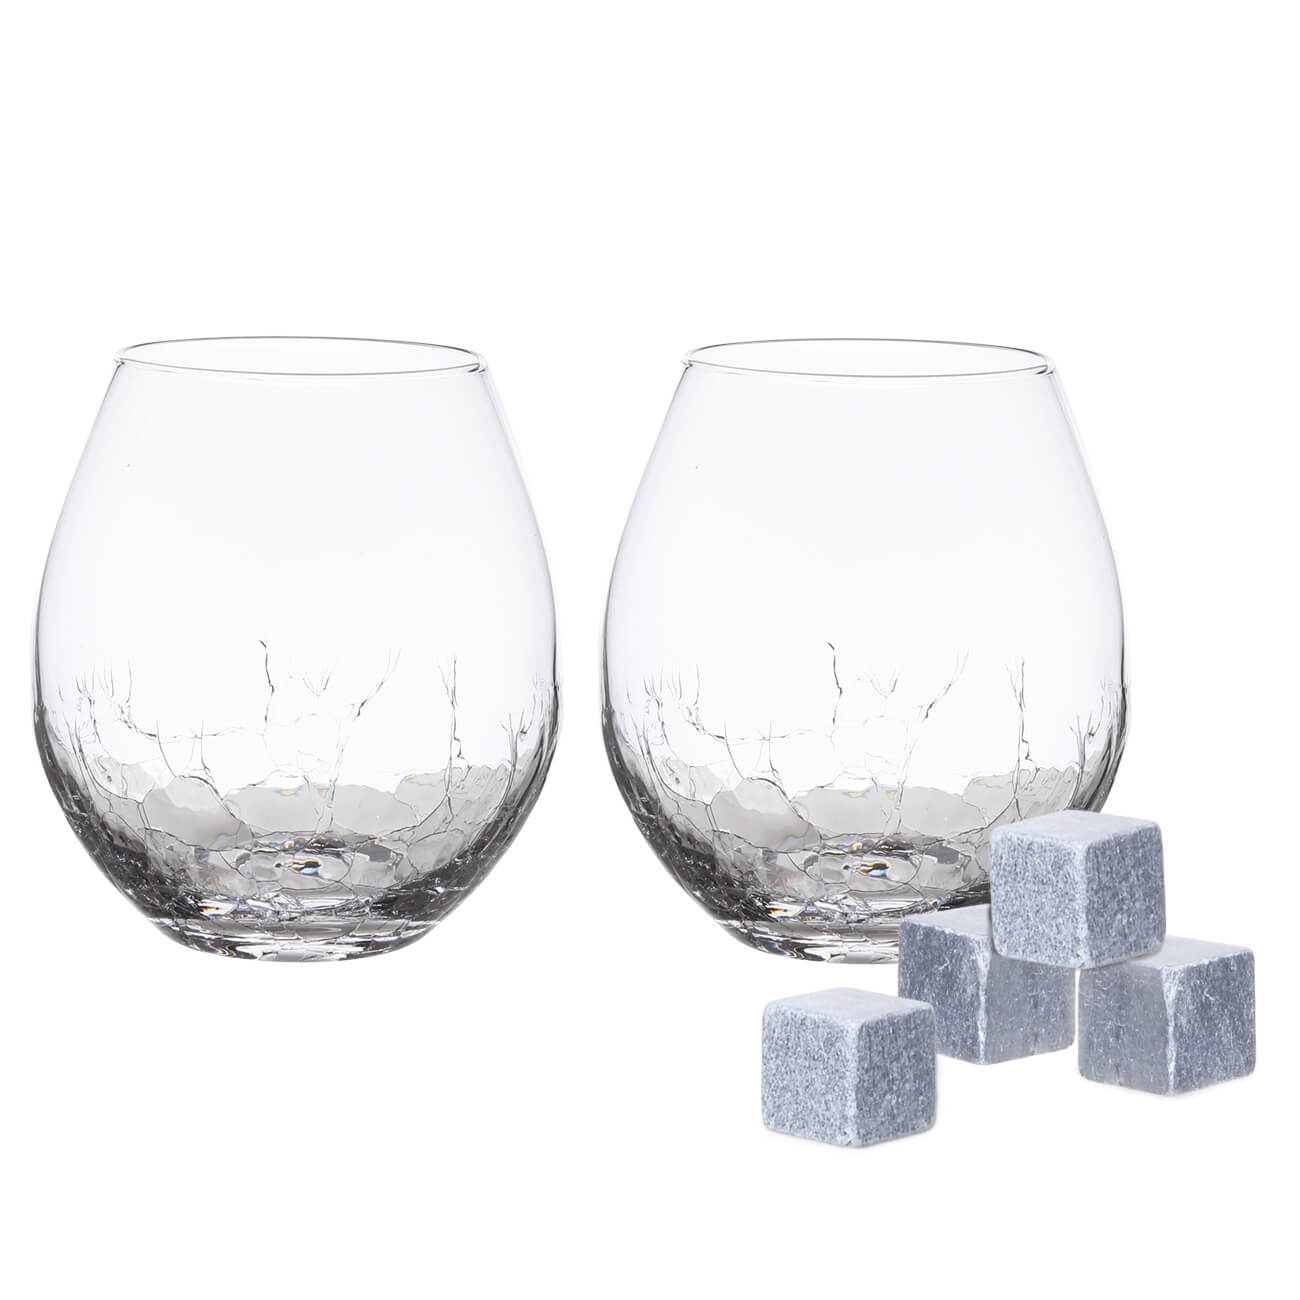 Набор для виски, 2 перс, 6 пр, стаканы/кубики, стекло/стеатит, Кракелюр, Ice набор для виски 2 перс 6 пр стаканы кубики стекло стеатит кракелюр ice